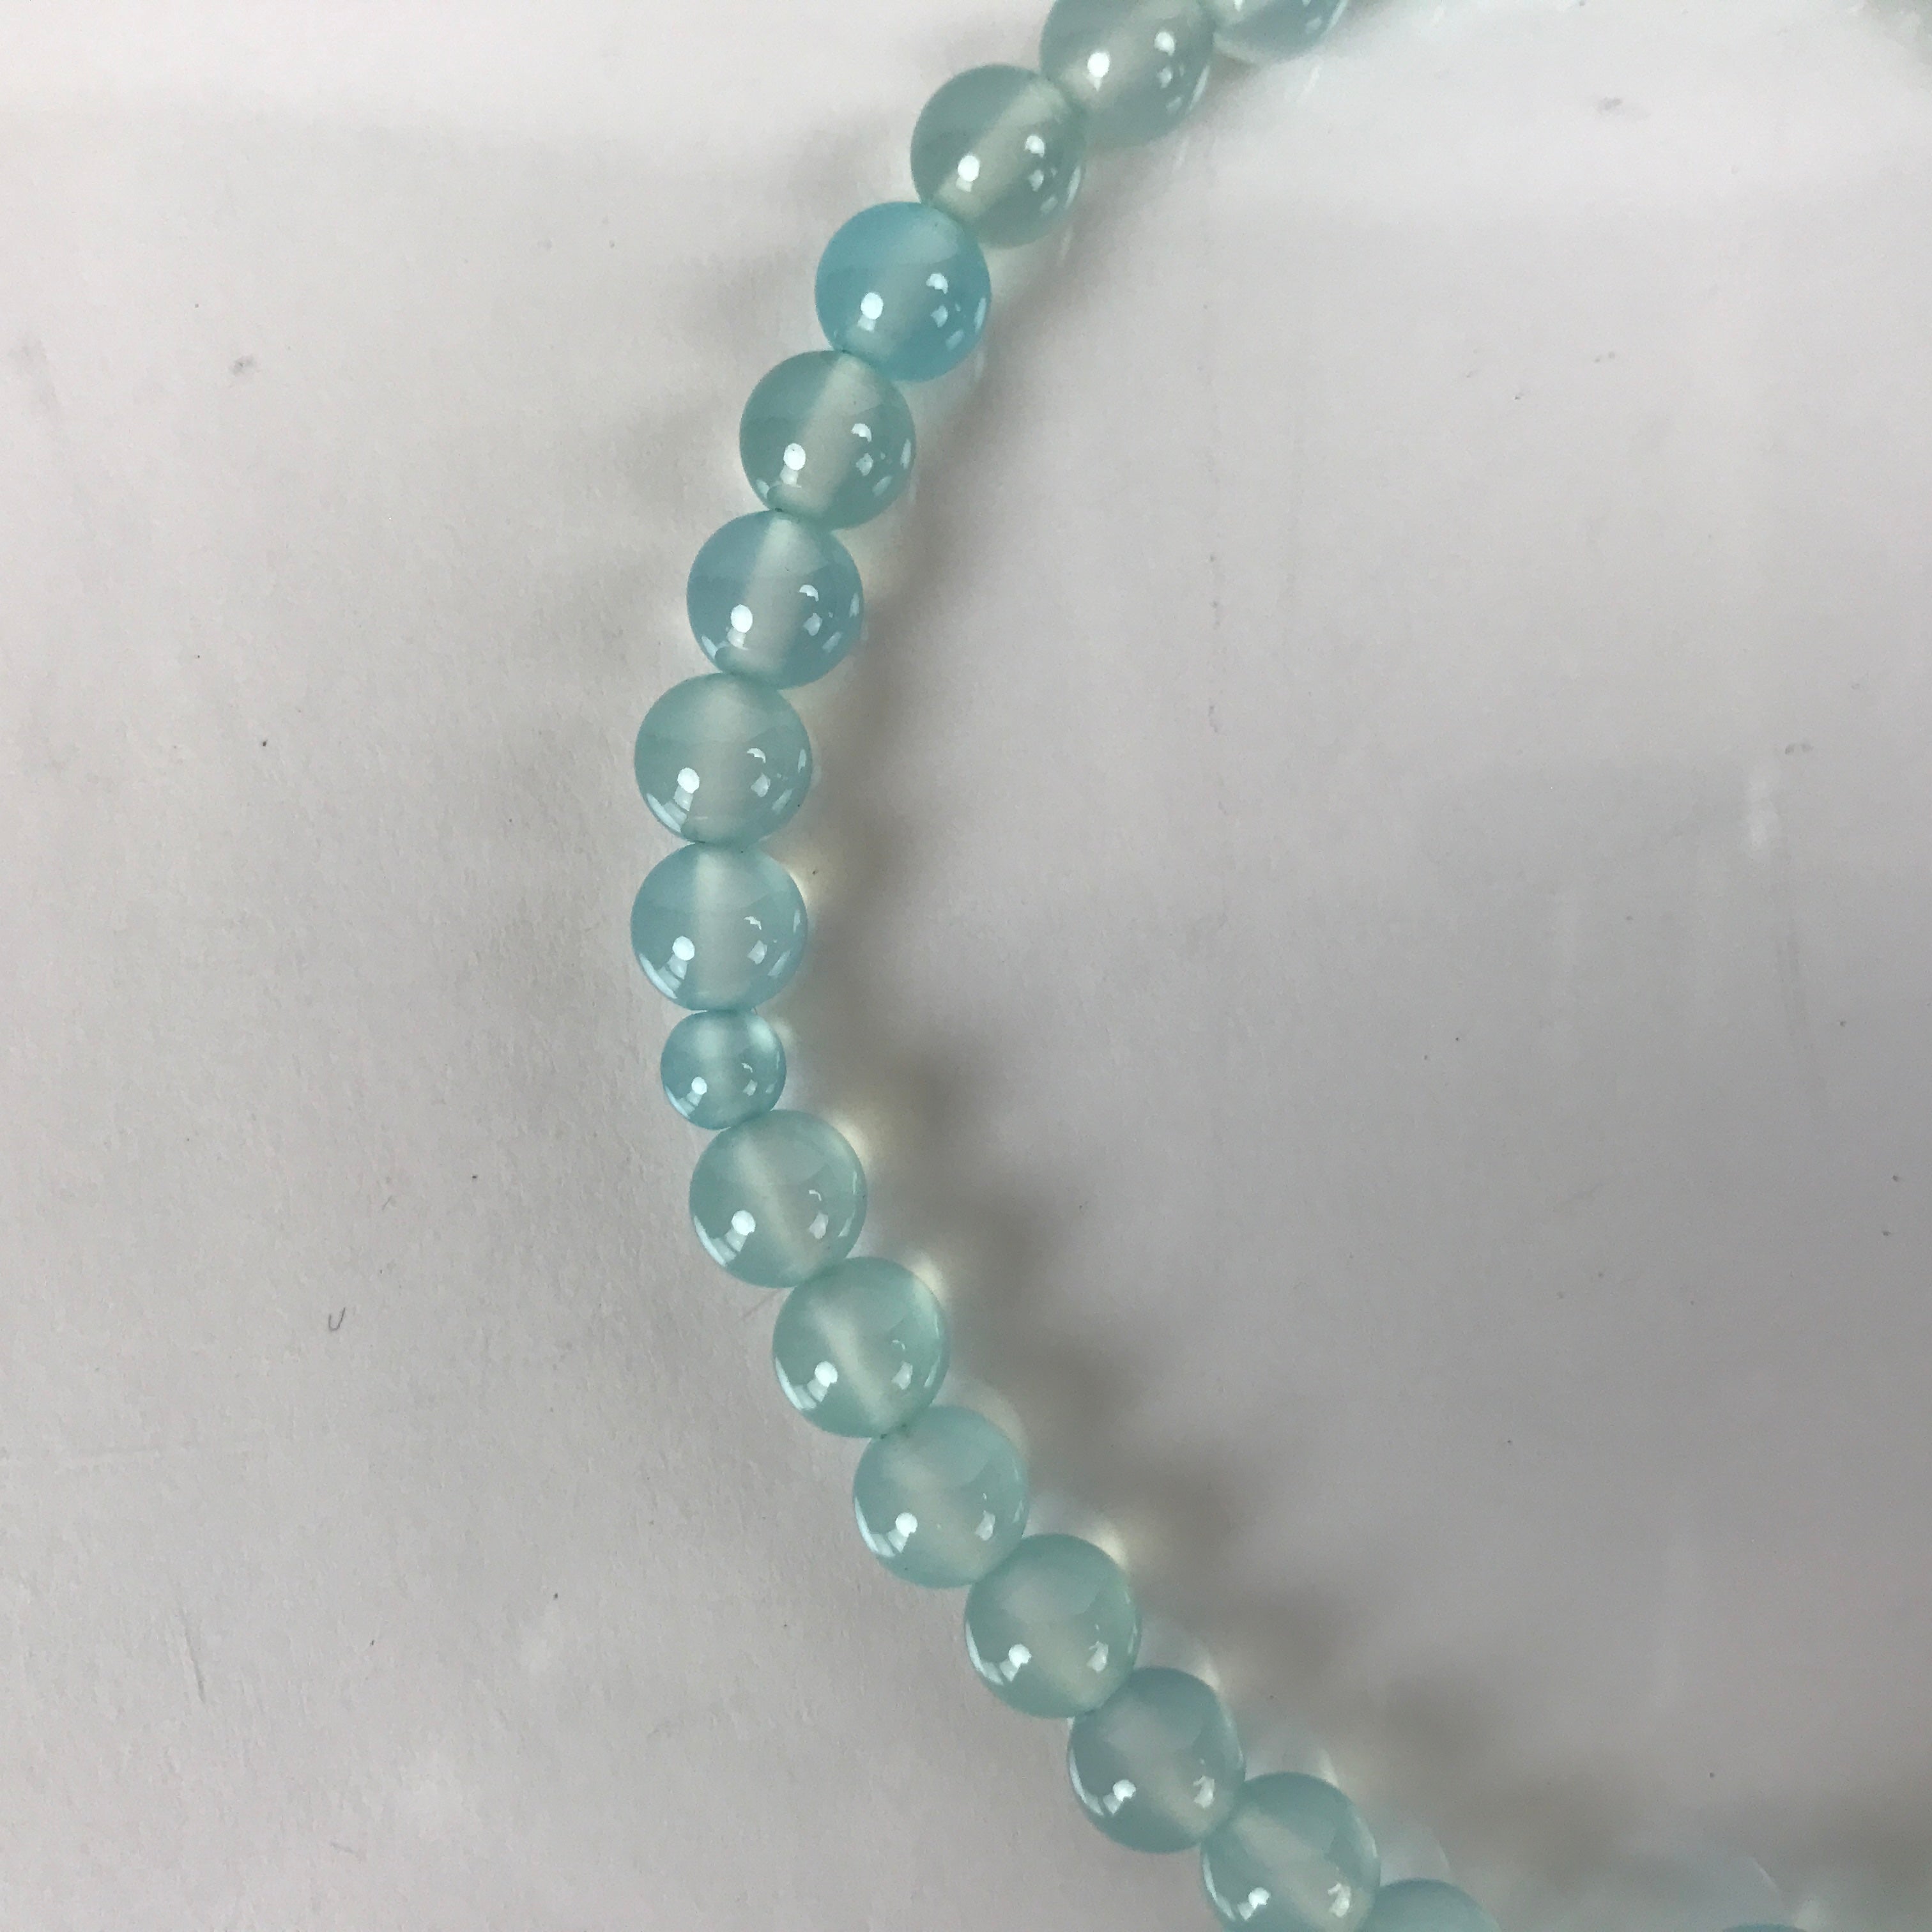 Japanese Buddhist Prayer Bracelet Vtg Rosary Juzu Blue Glass Beads Tassels JZ151